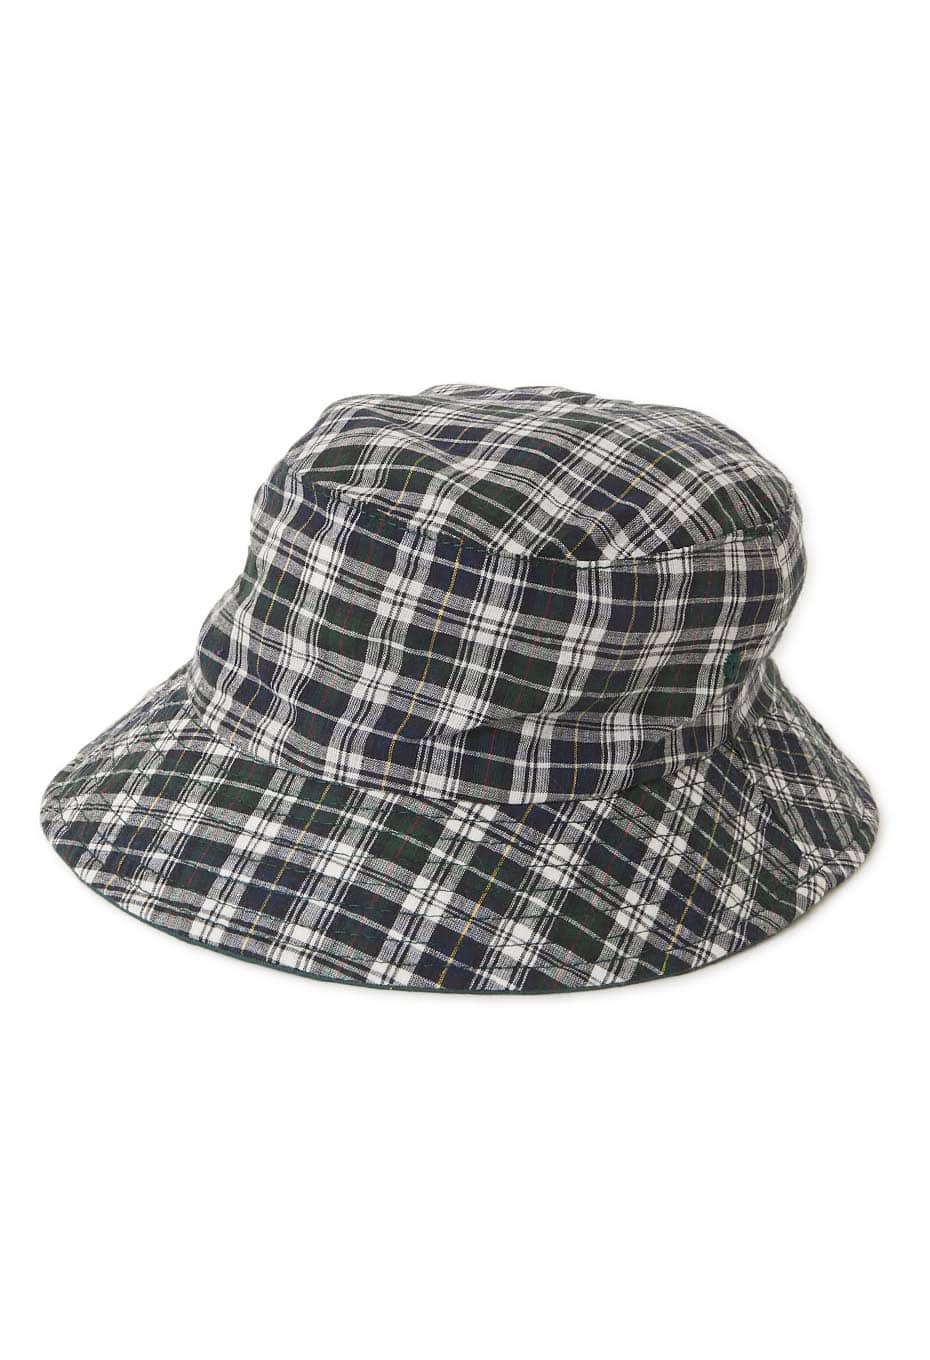 LITE YEAR Madras Plaid Bucket Hat